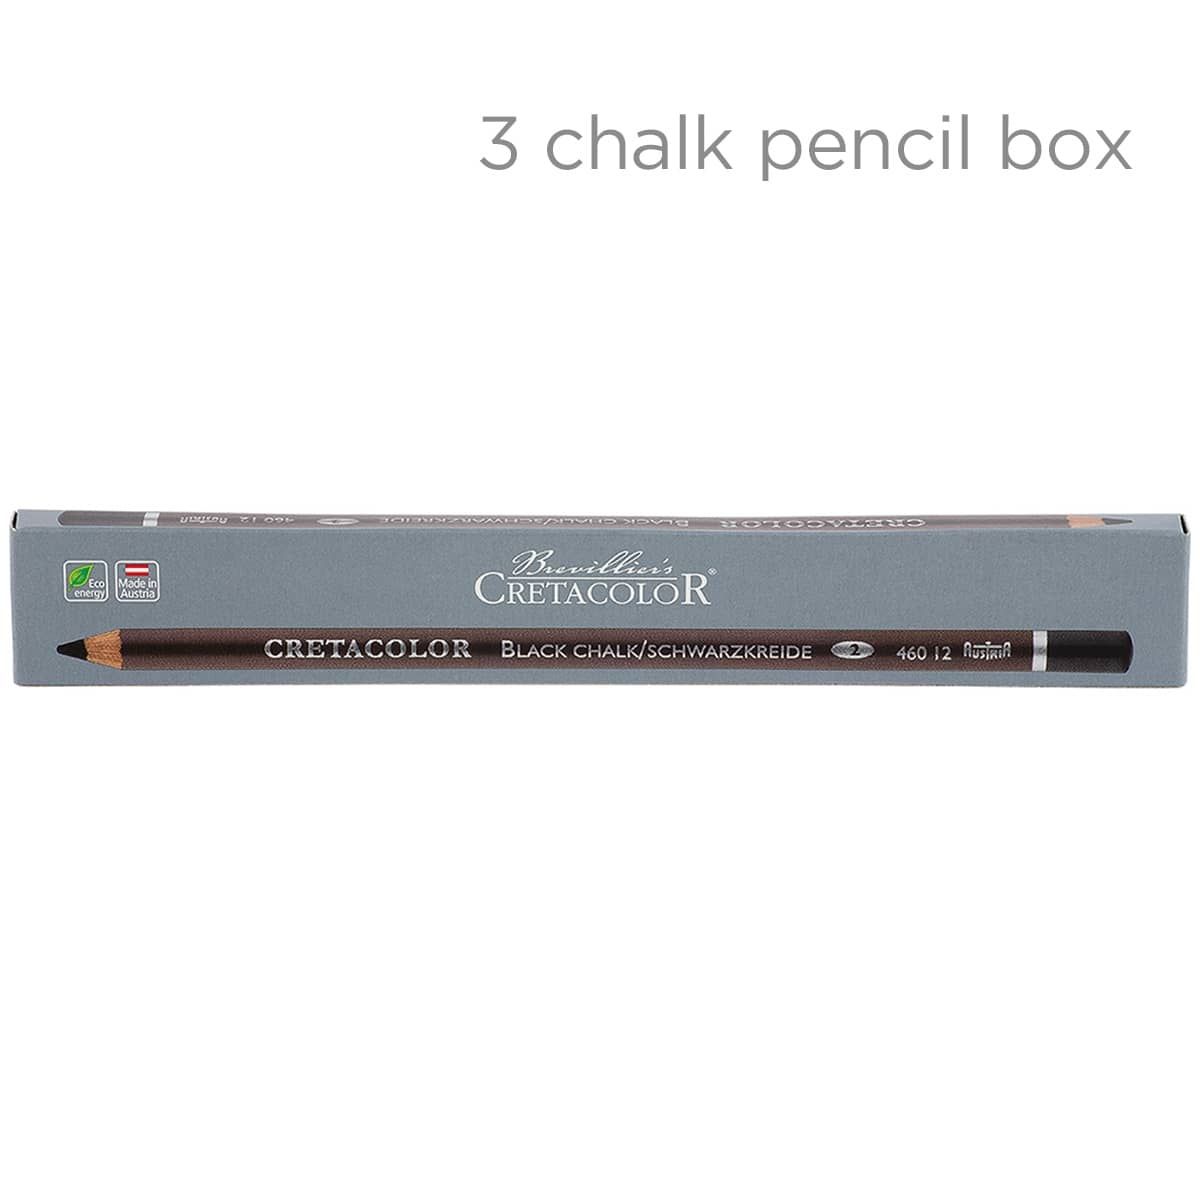 Cretacolor Chalk Pencil 3 Pack Box Black